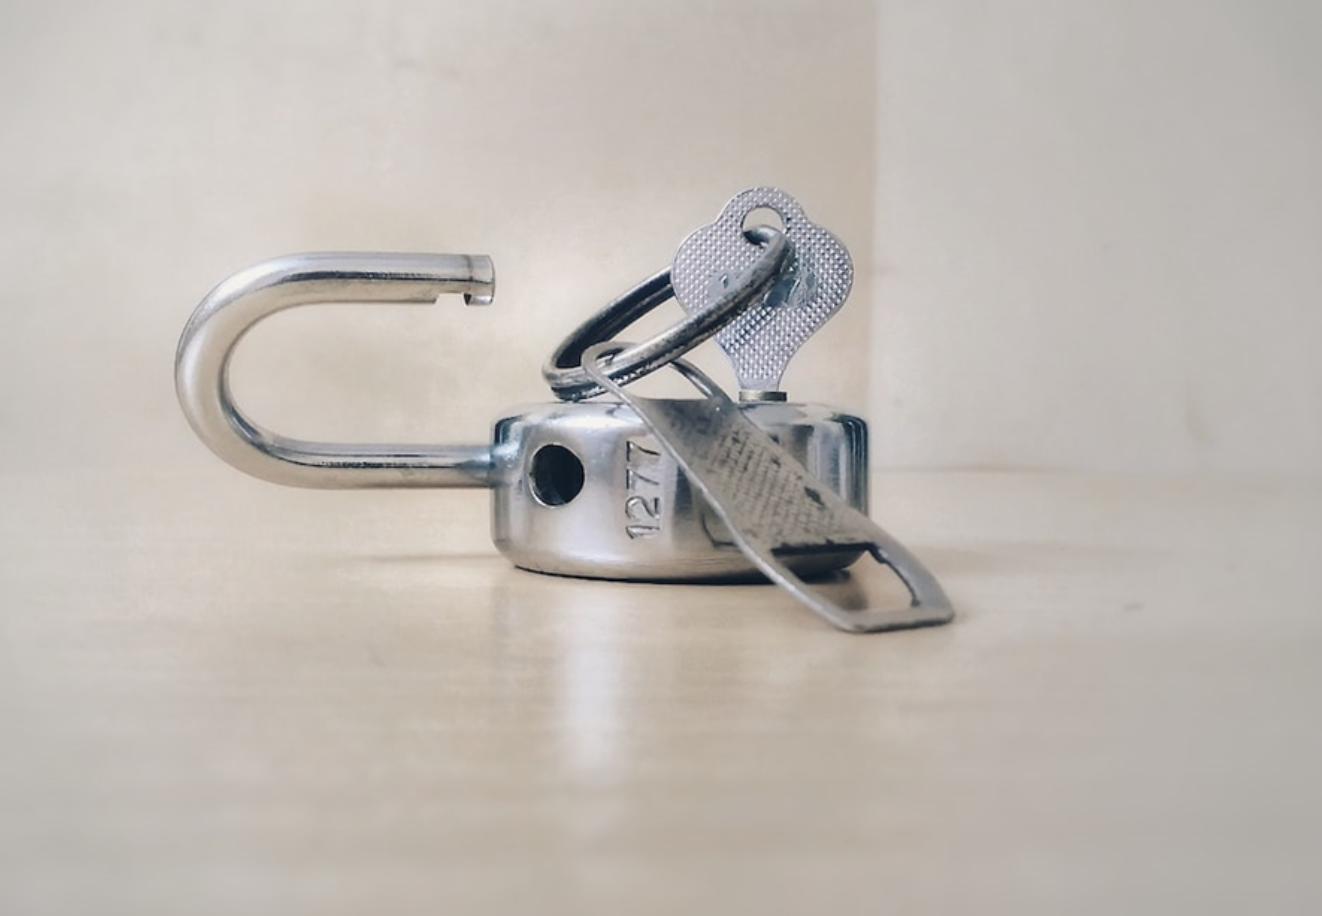 Open padlock with key; image by Basil James, via Unsplash.com.